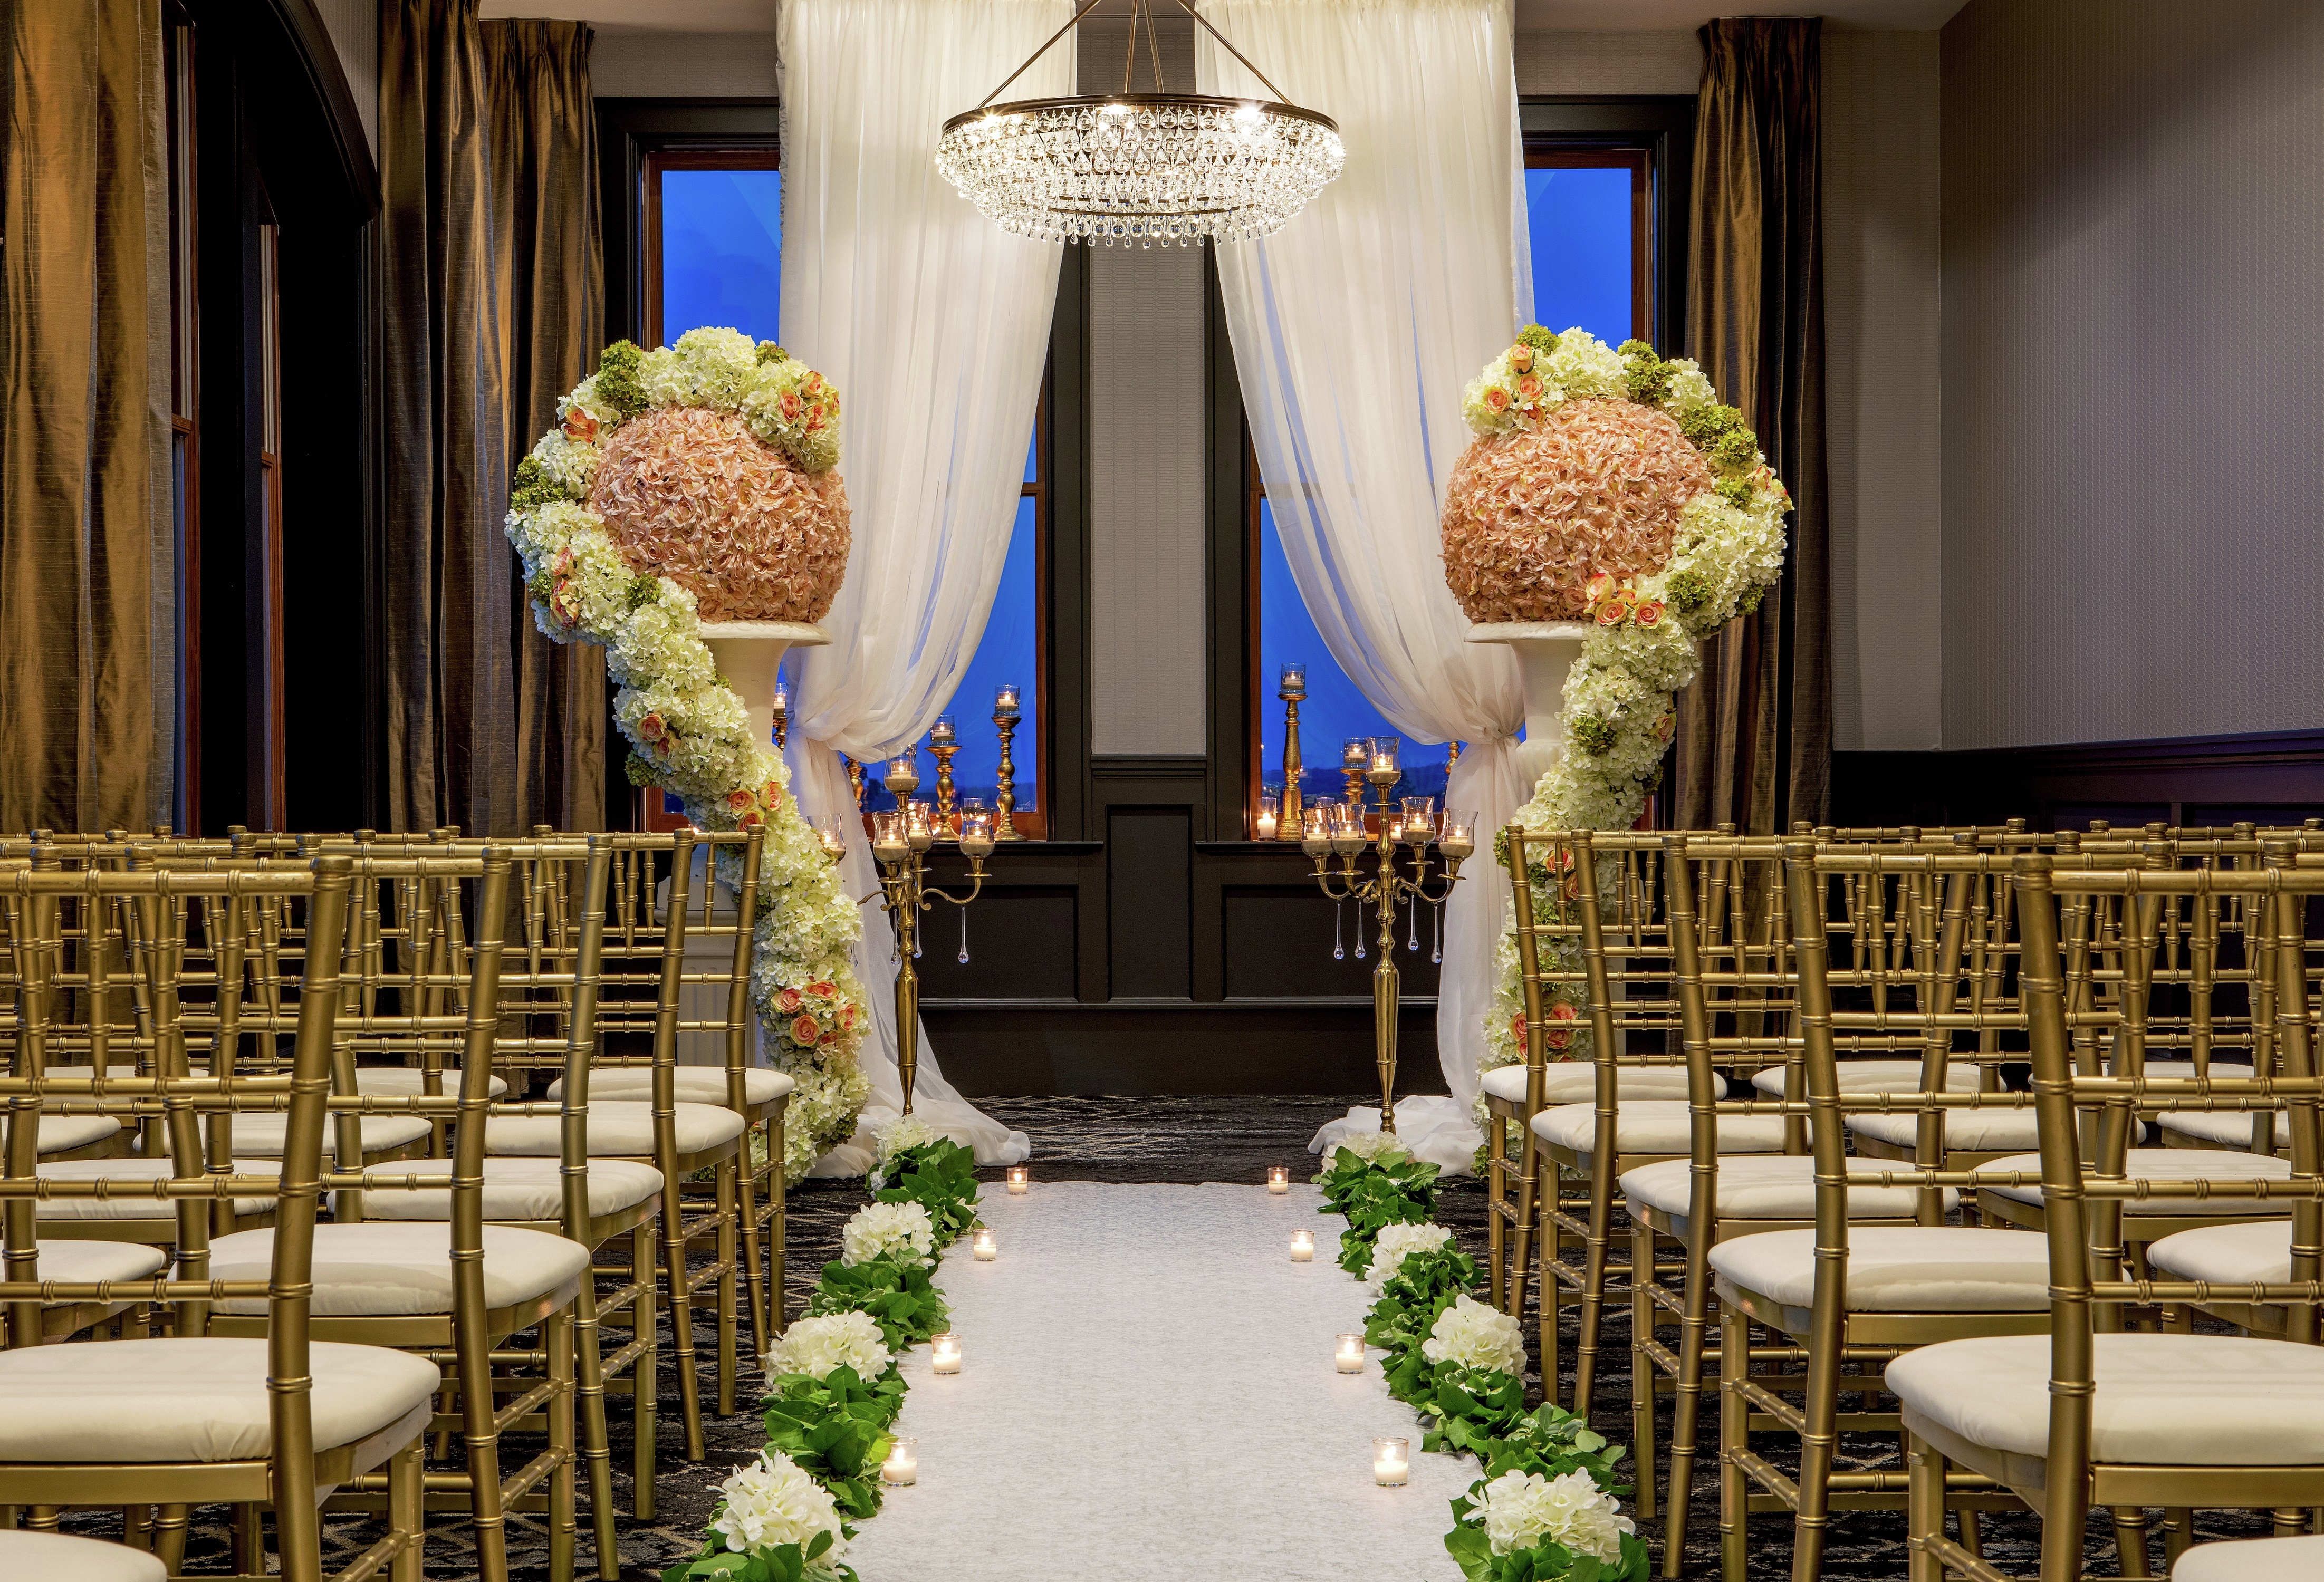 Wedding Ceremony Aisle, Seating, and Decor